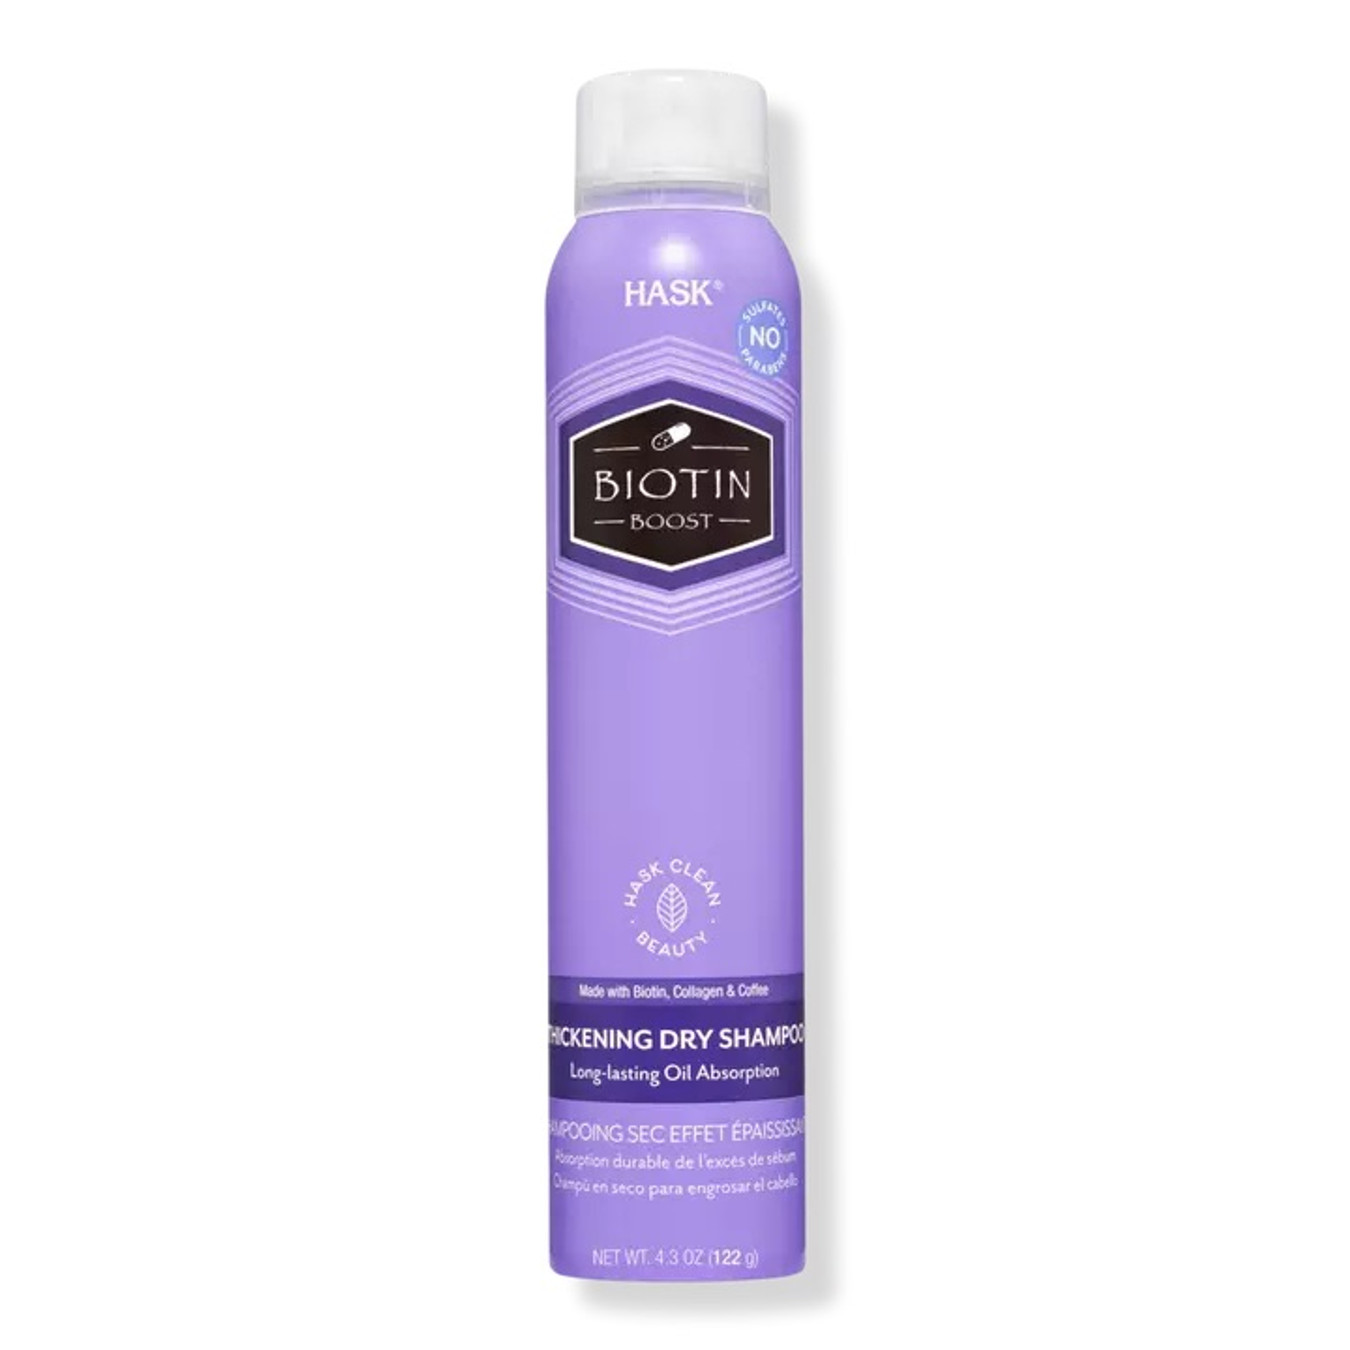 Hask Biotin Thickening Dry Shampoo (4.3 oz)